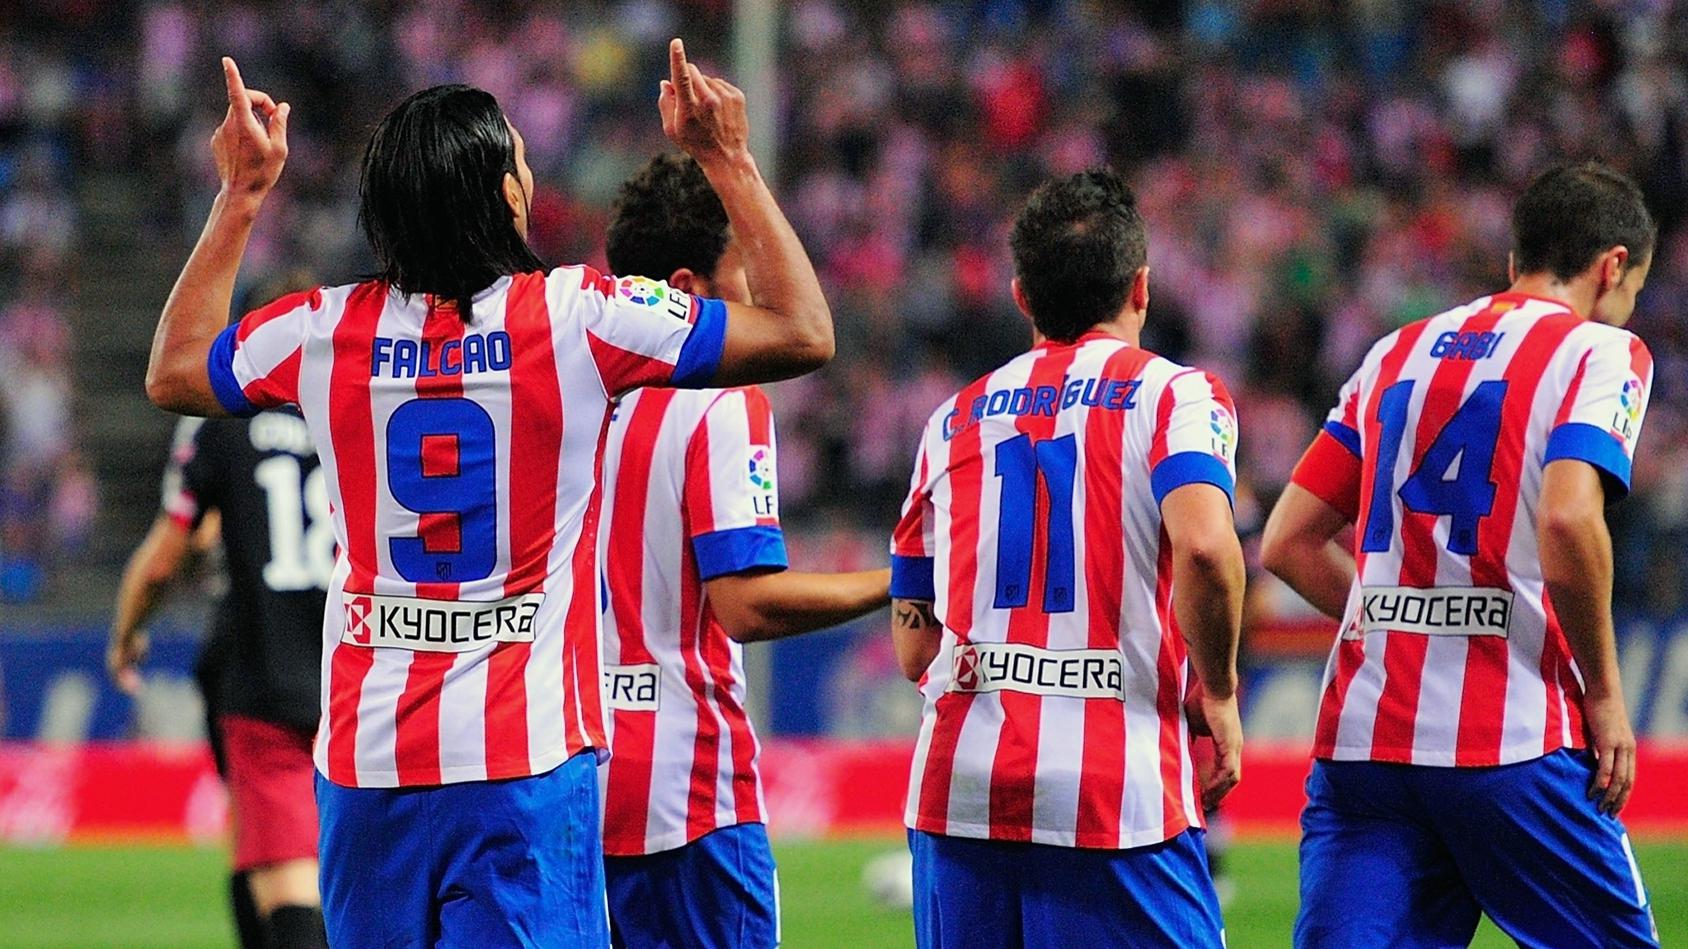 Atletico Madrid Falcao 9 2012/13 Football Shirt Name/Number Set Home Player 